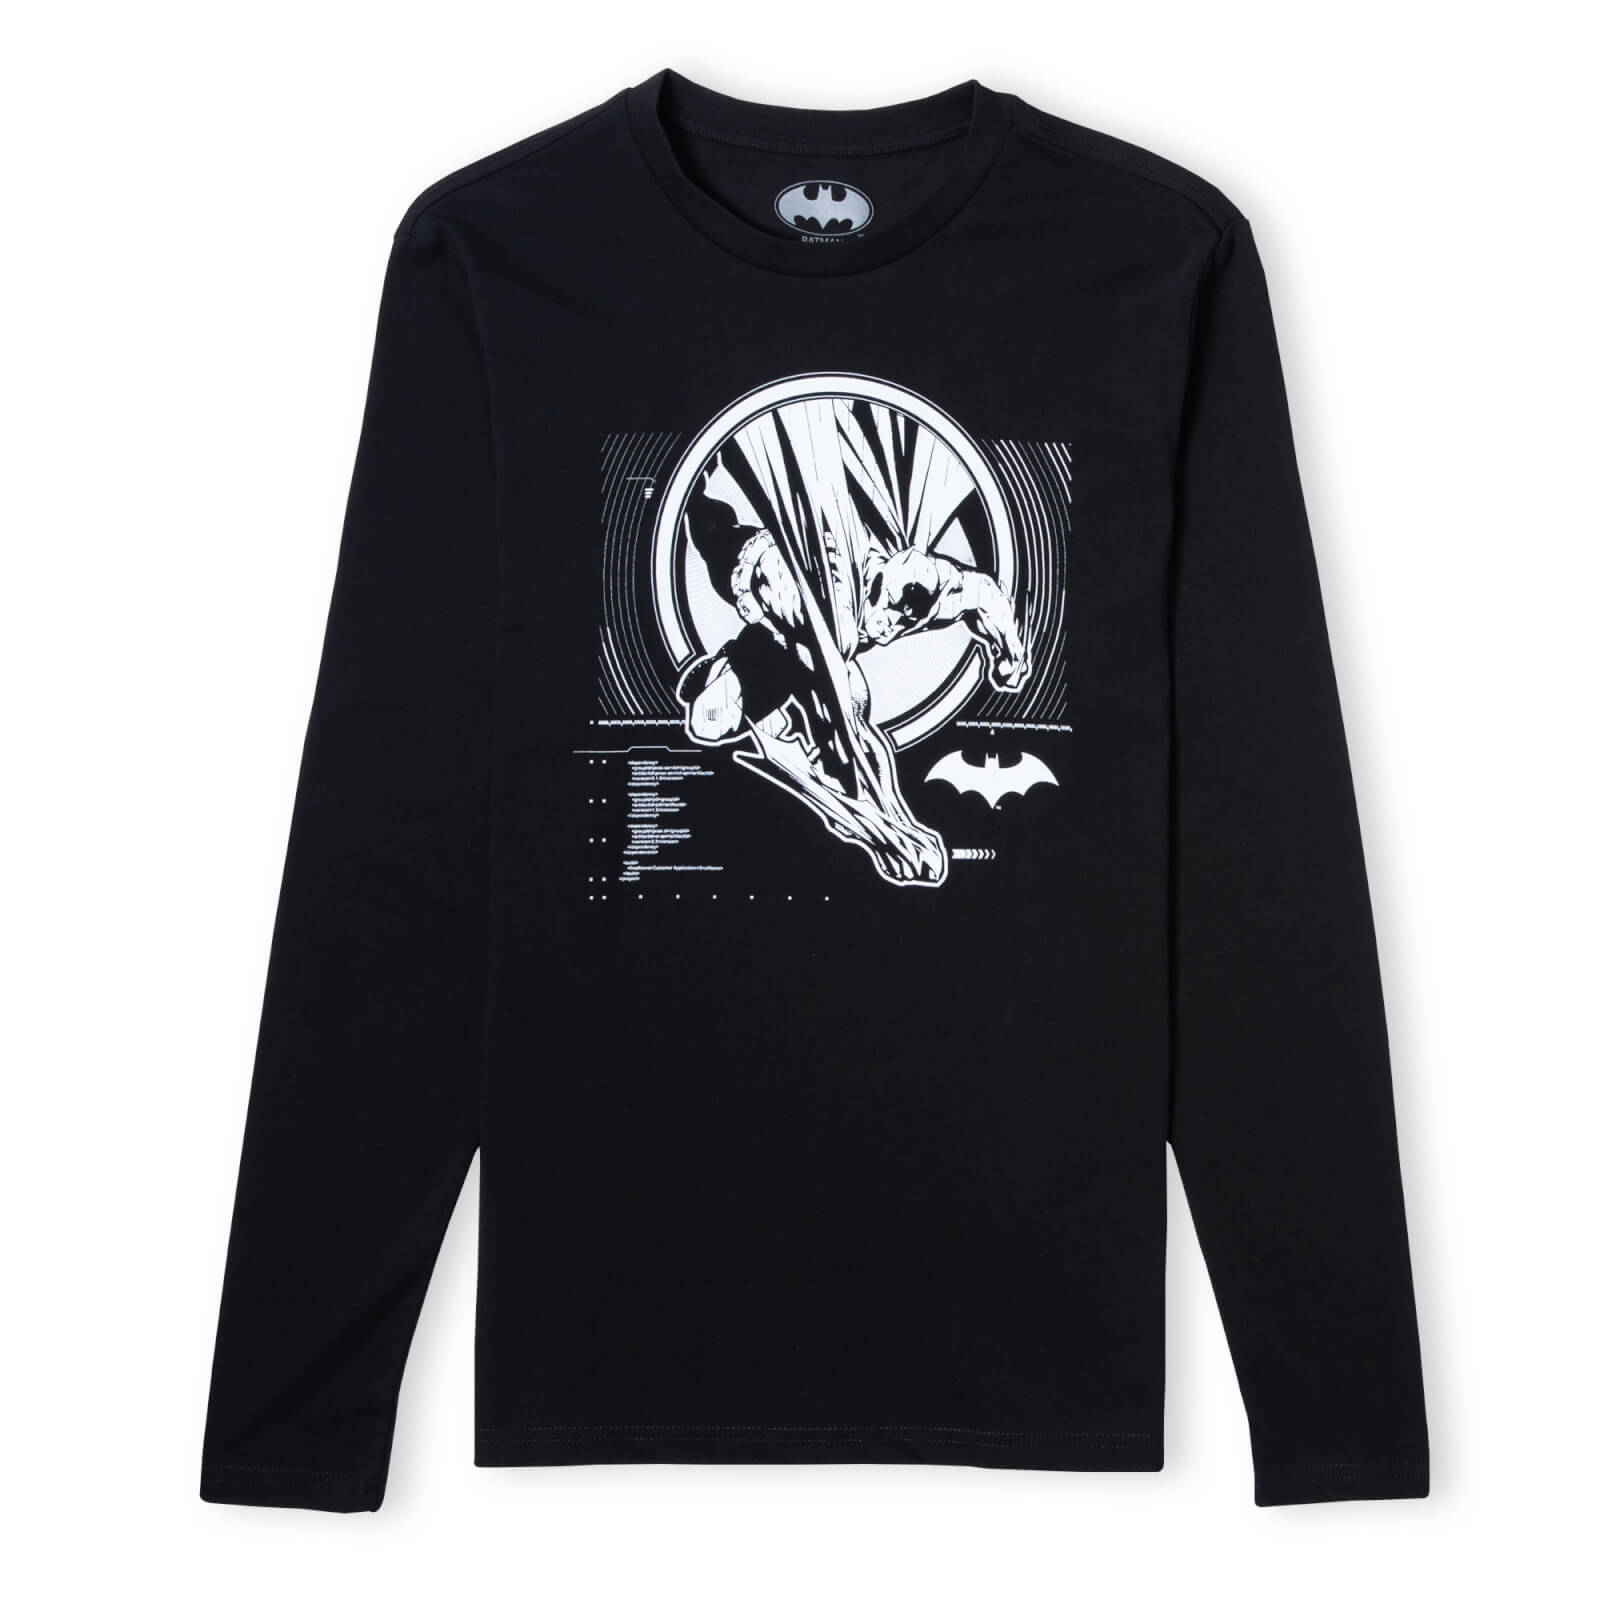 Batman Action Unisex Long Sleeve T-Shirt - Black - XS - Black